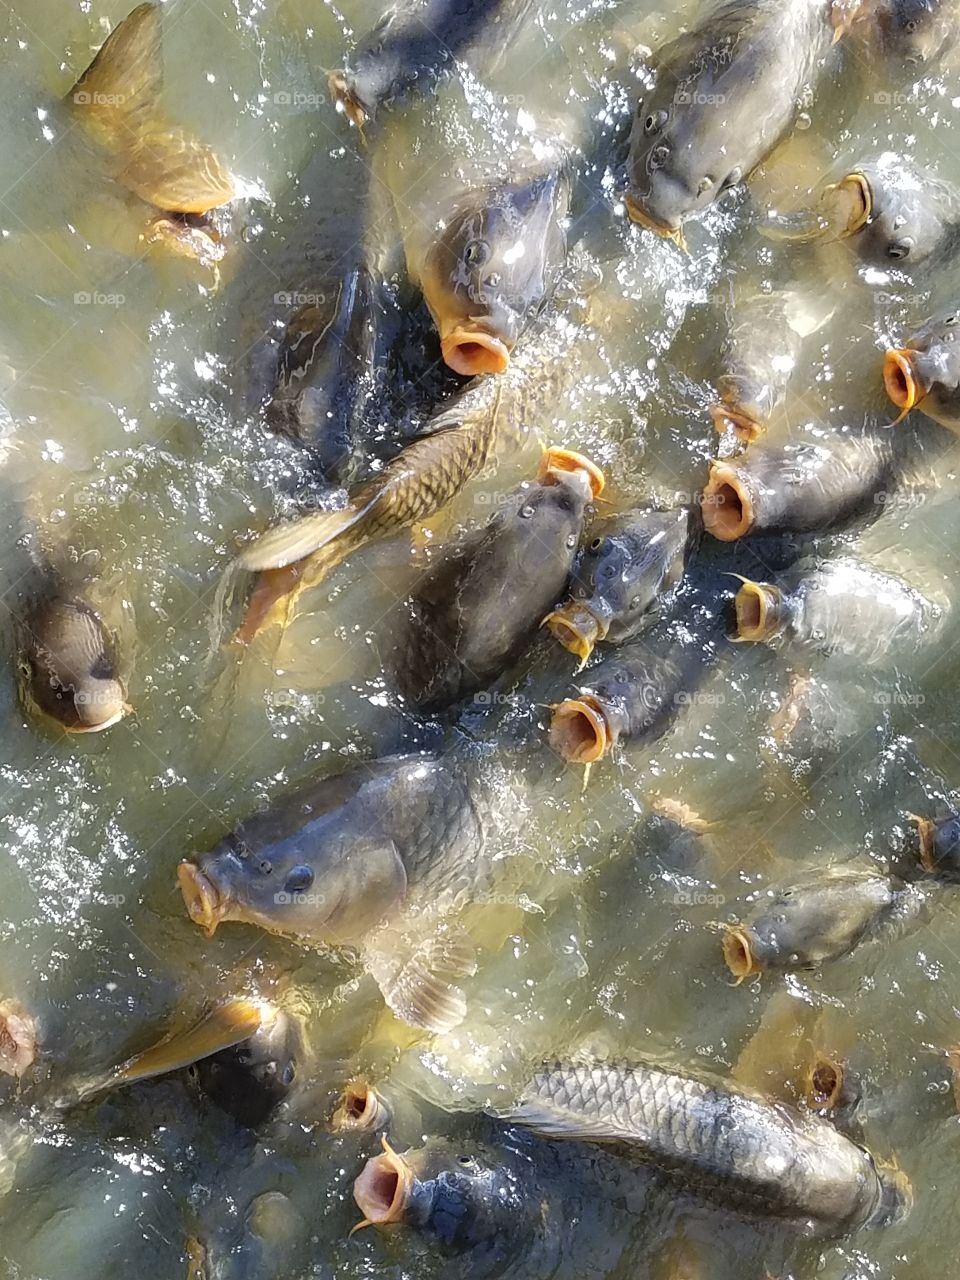 hungry catfish